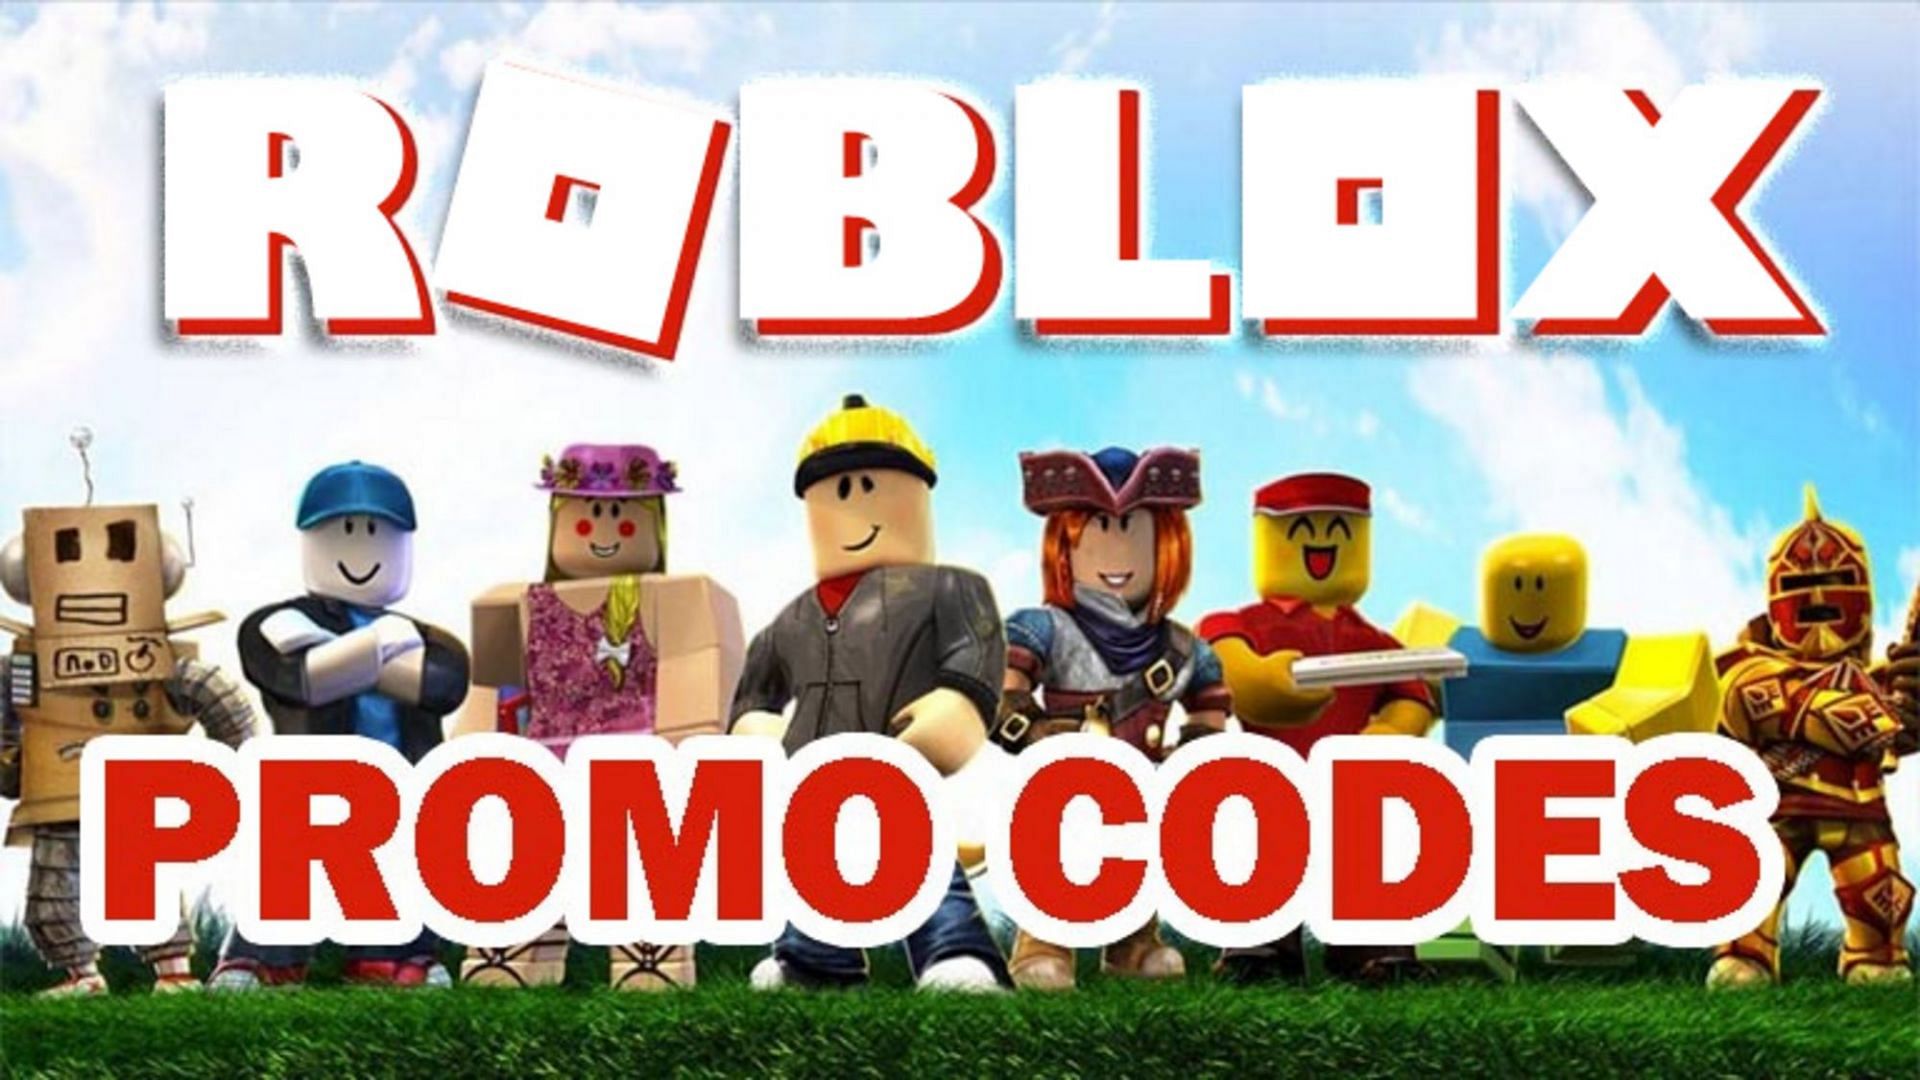 Promo codes to redeem free rewards in Roblox games (Image via Roblox)